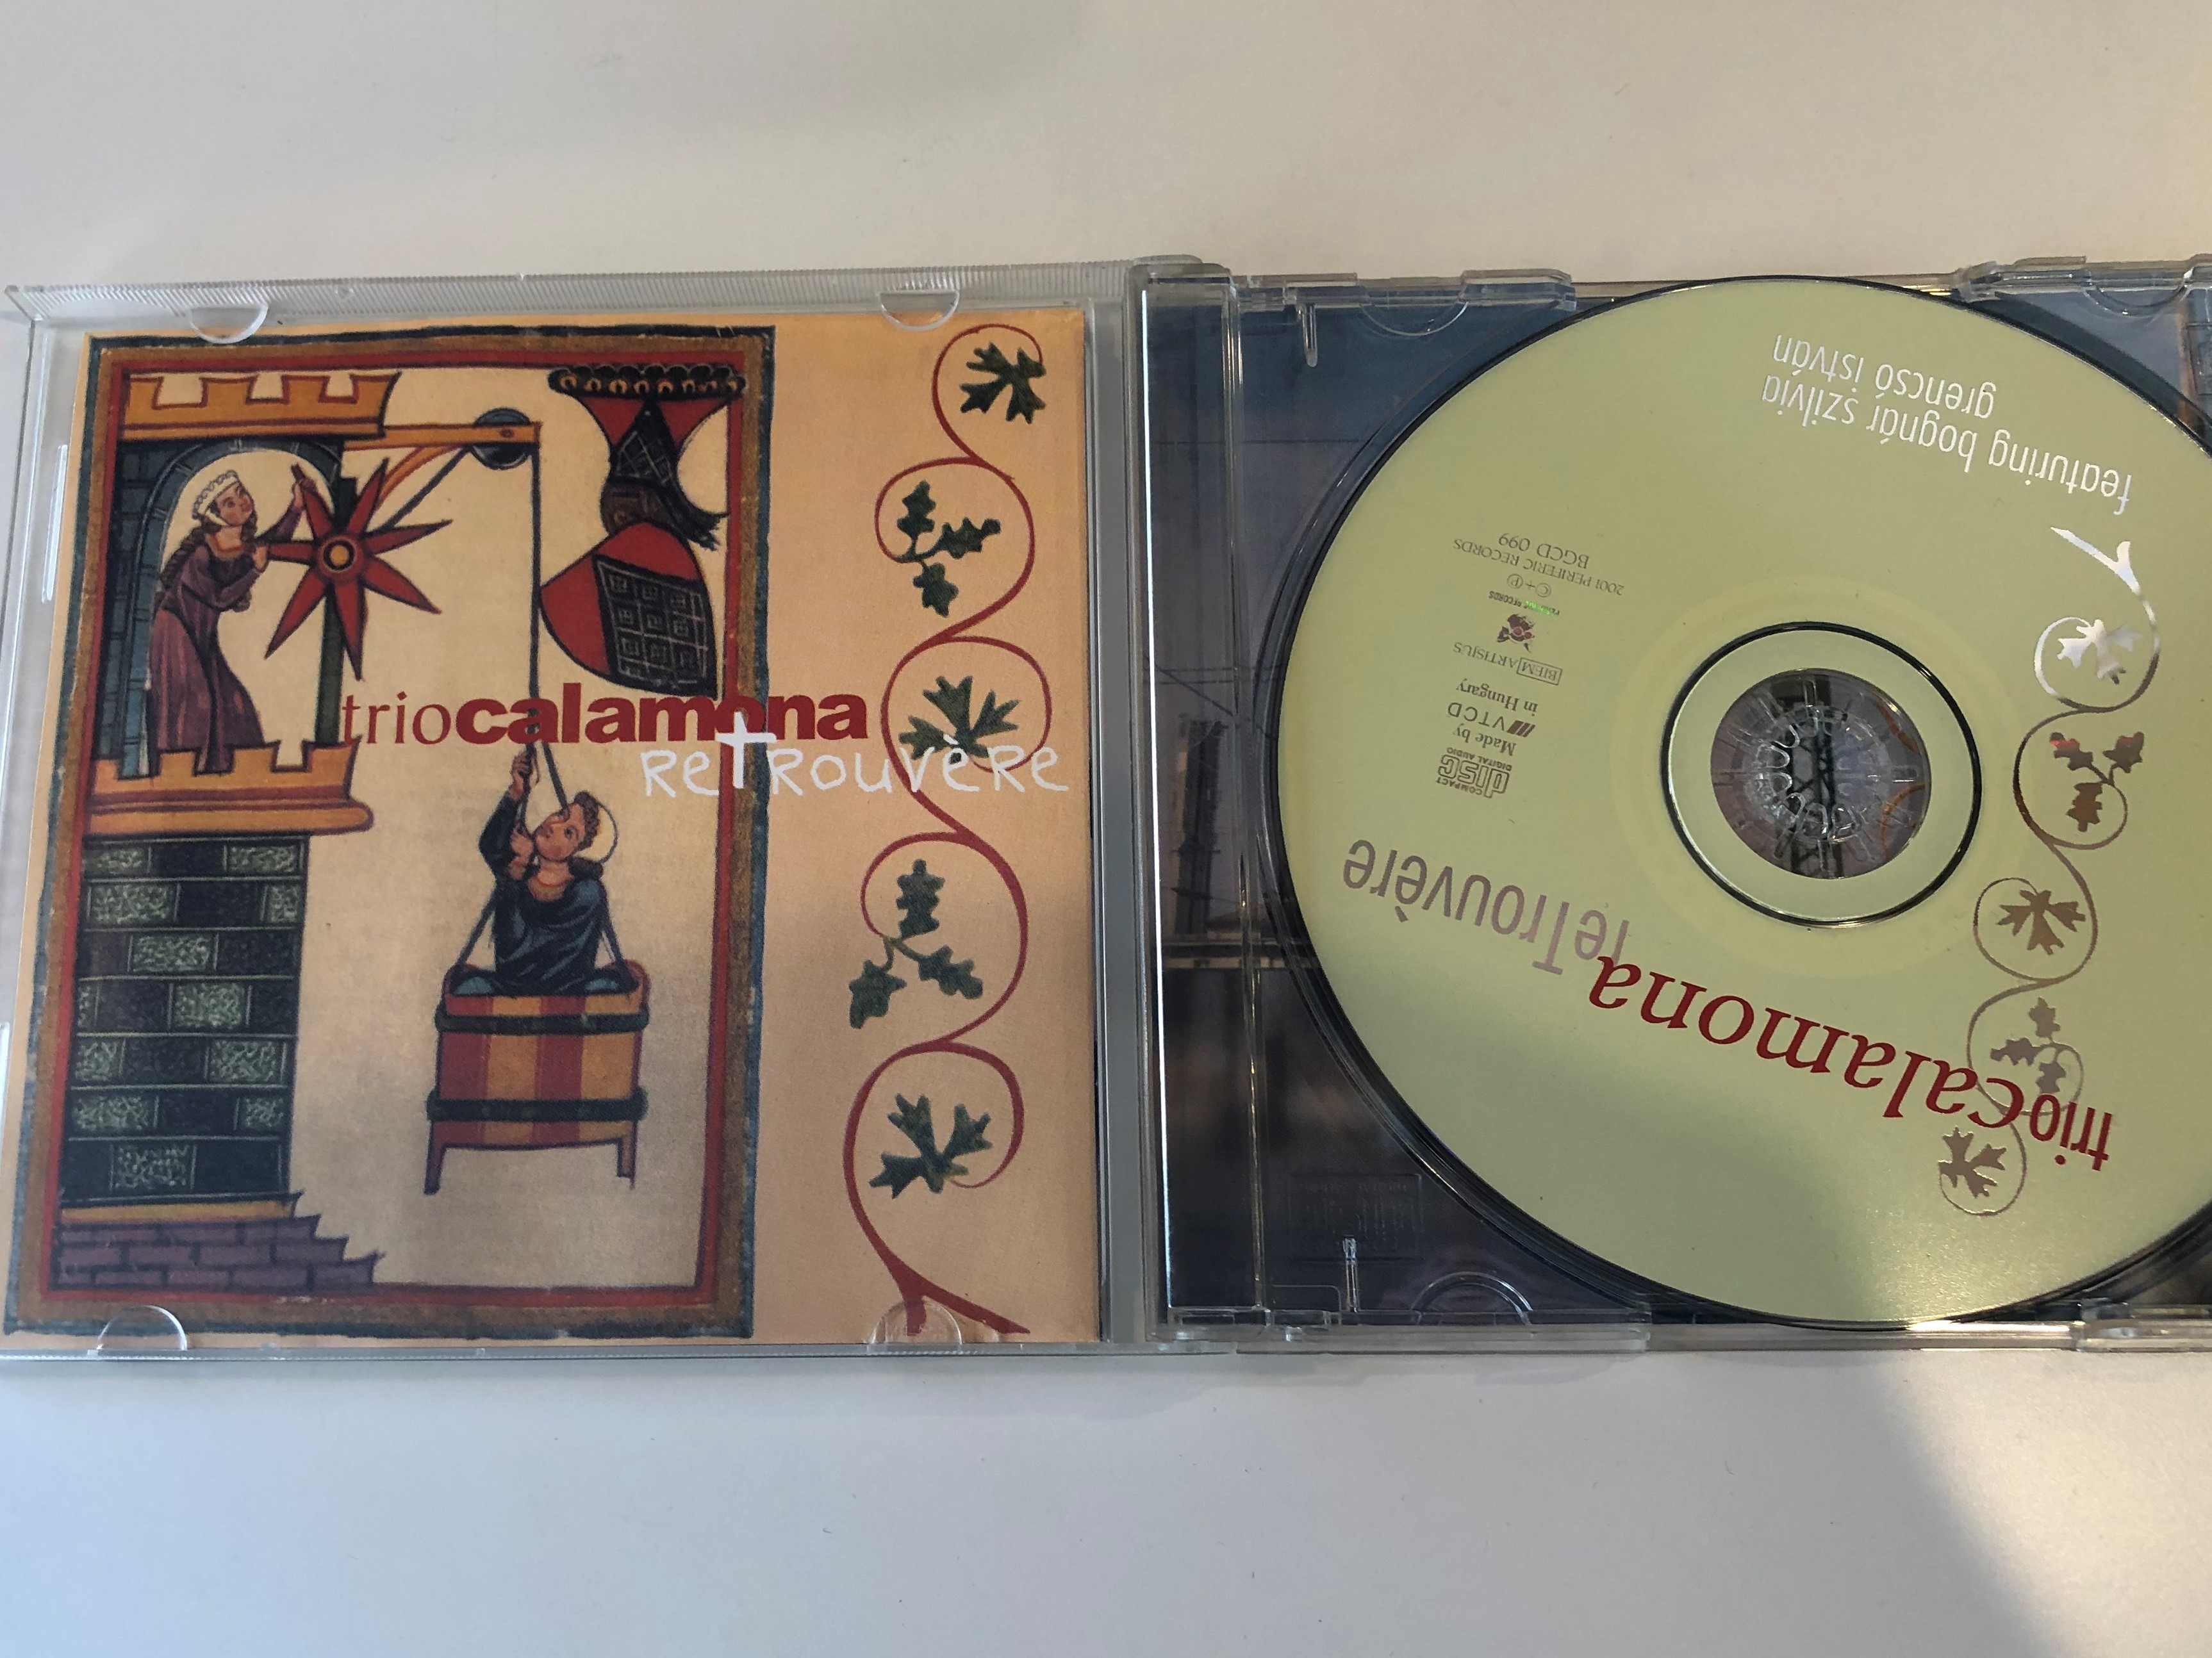 trio-calamona-re-trouvere-periferic-records-audio-cd-2001-bgcd-099-2-.jpg